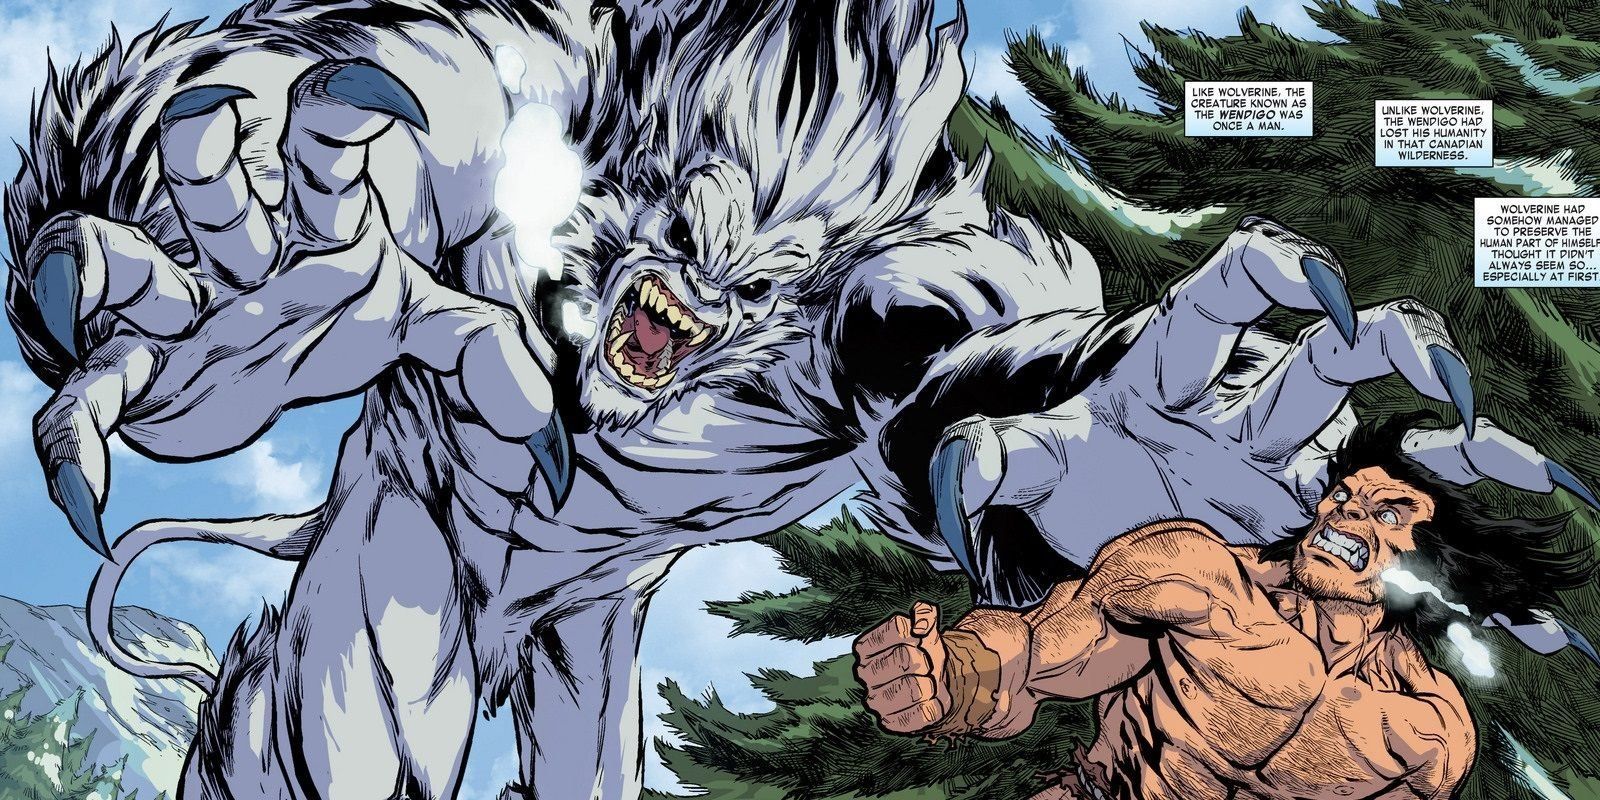 Wendigo chasing Wolverine through the forest in Marvel Comics